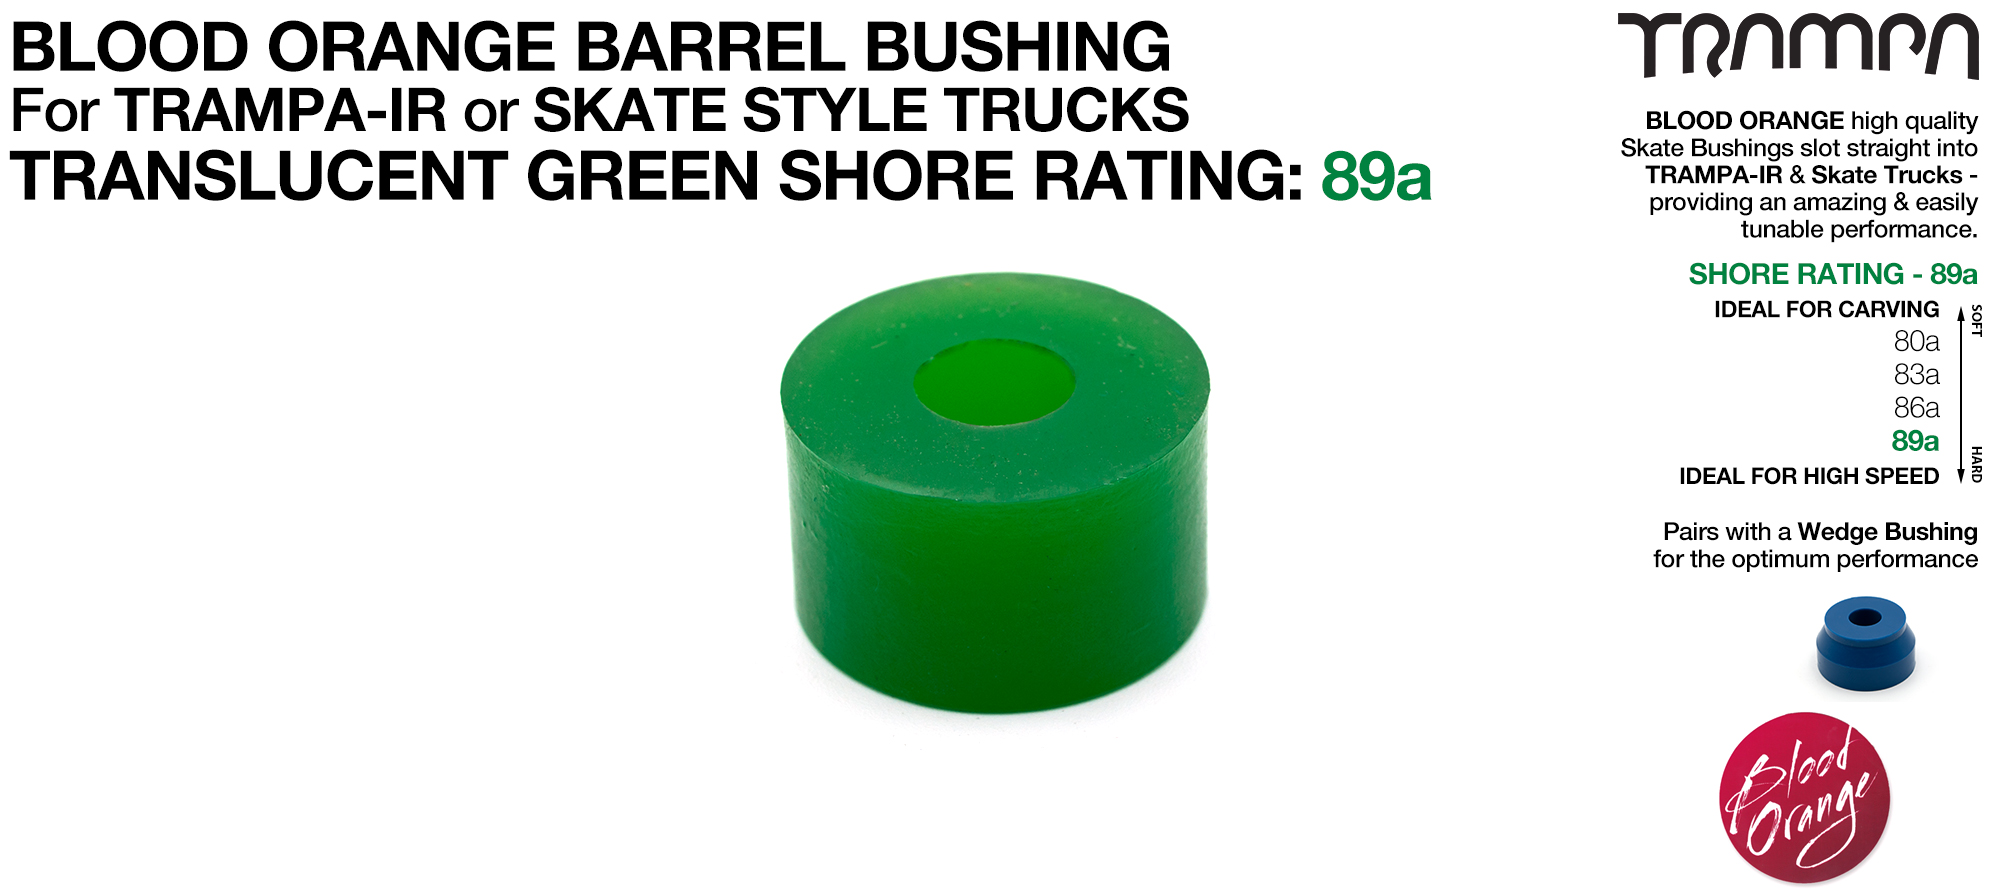 Blood Orange BARREL - GREEN Translucent 89a